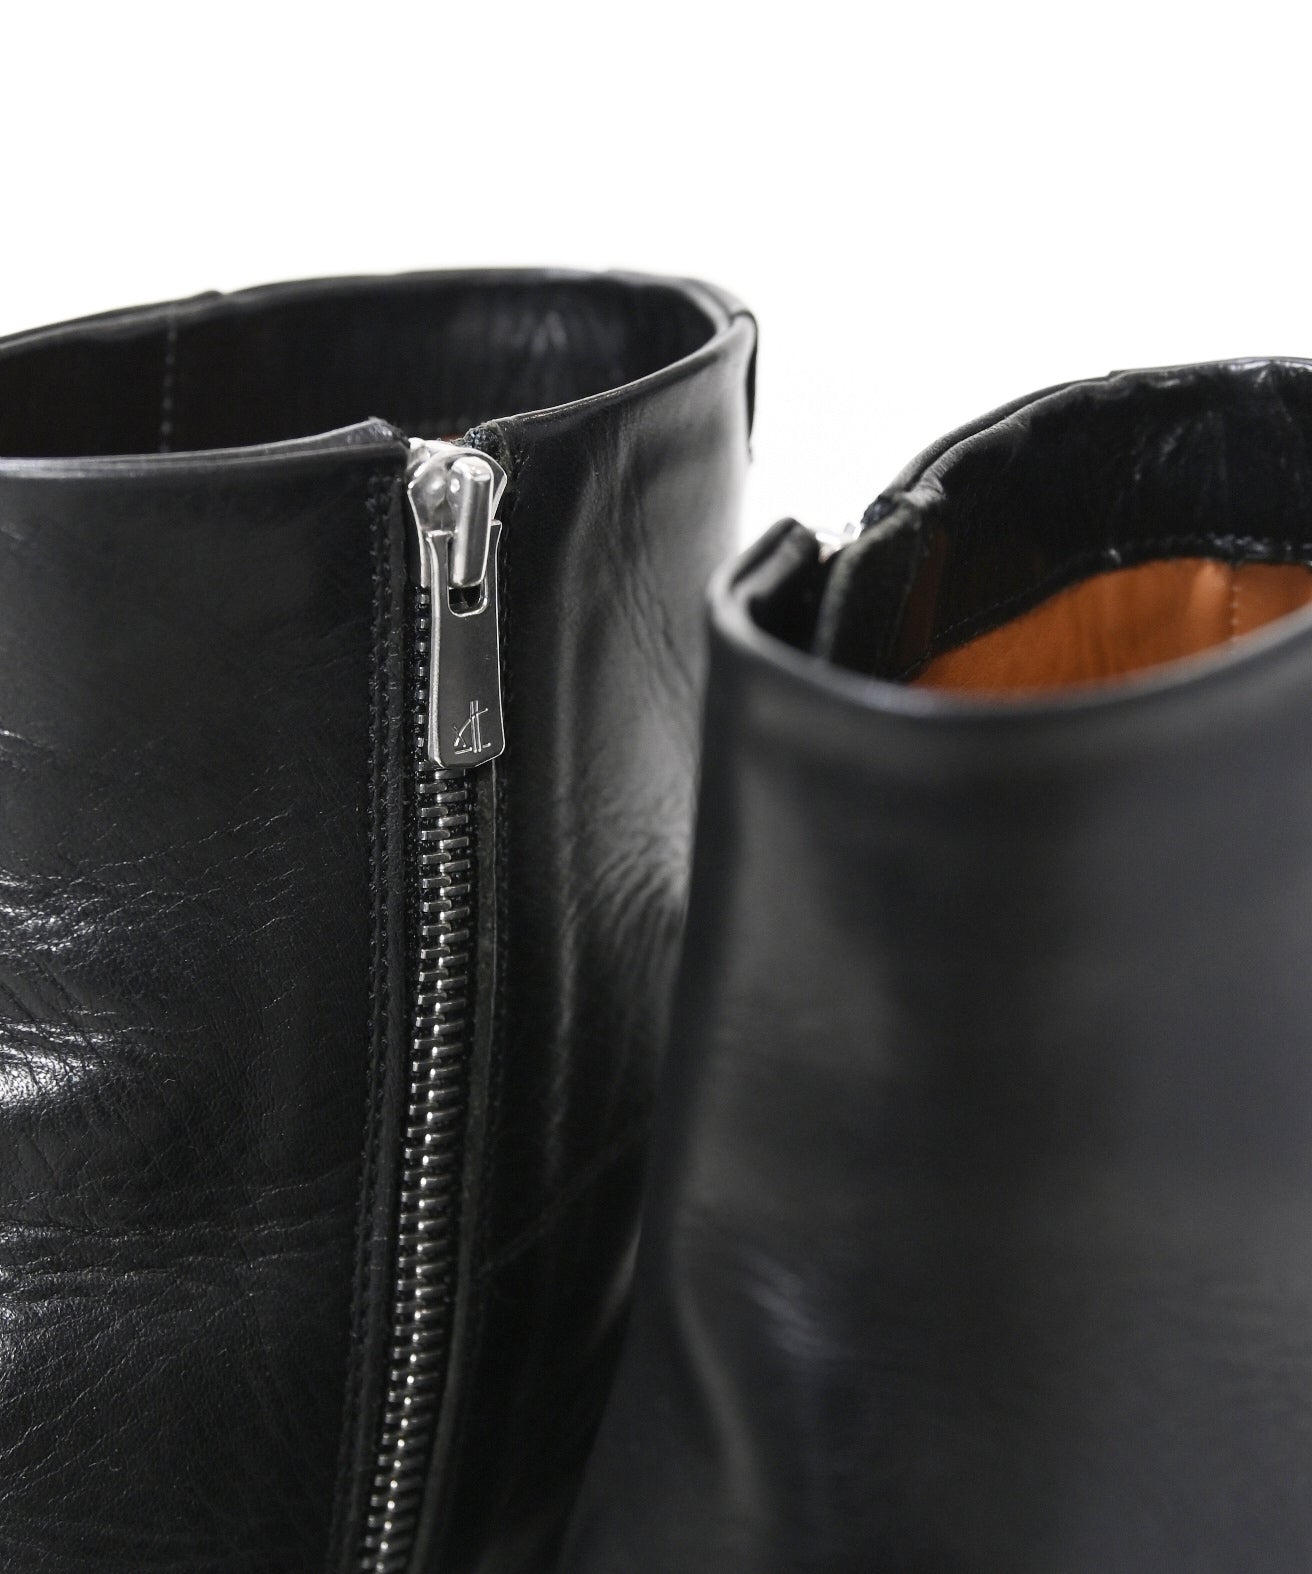 New side zip boots / ER1201